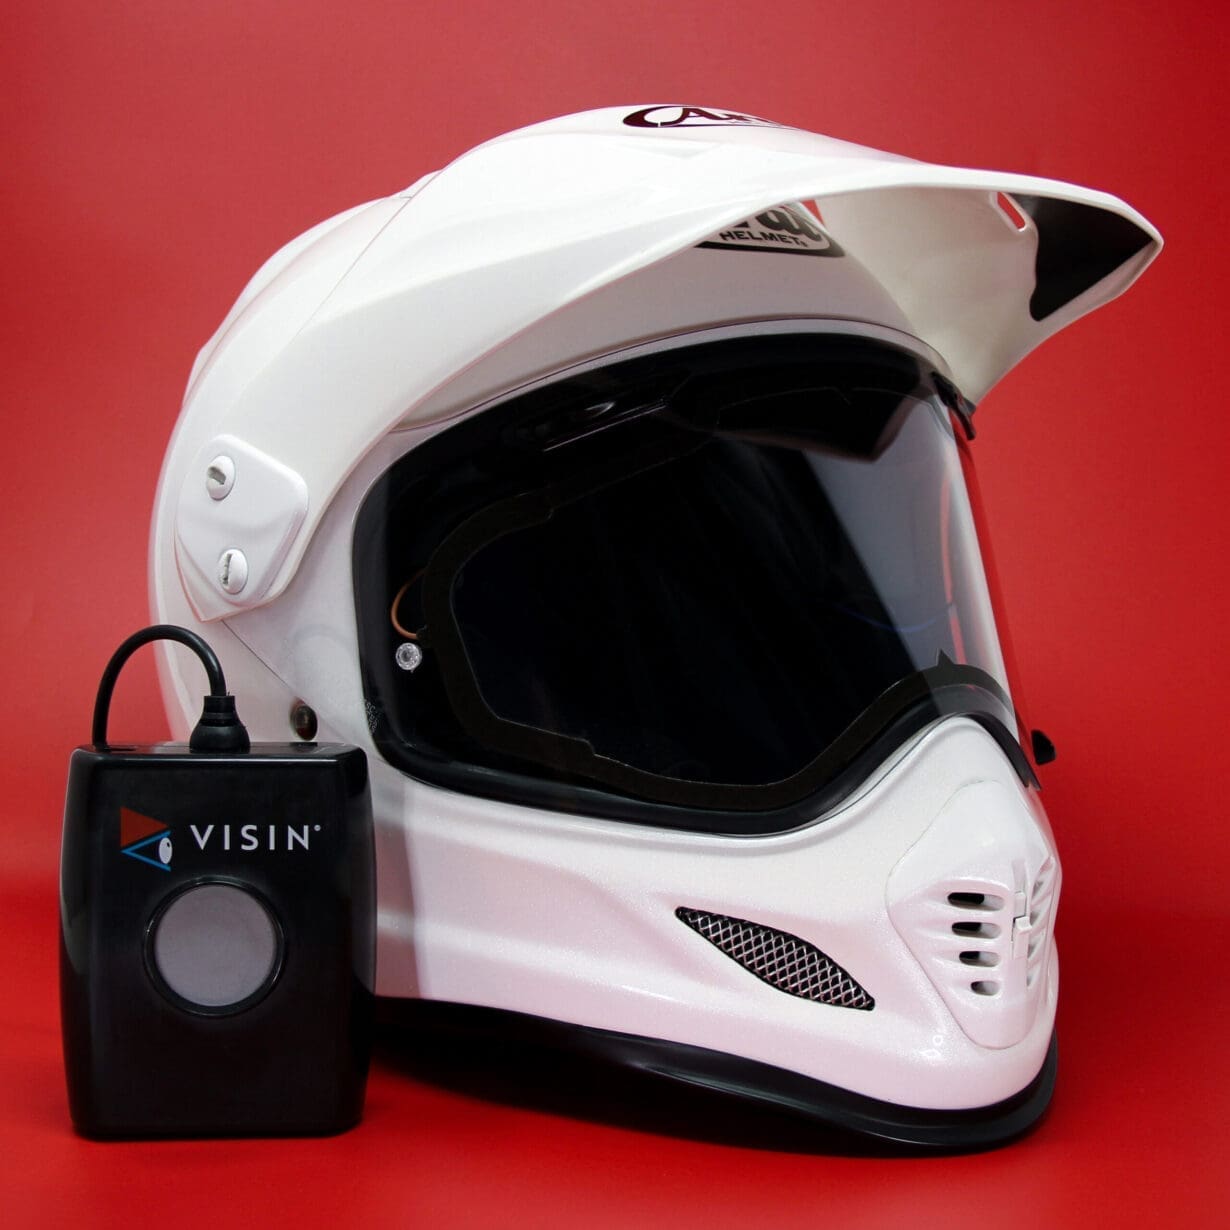 FOG OFF: VISIN heated visor inserts